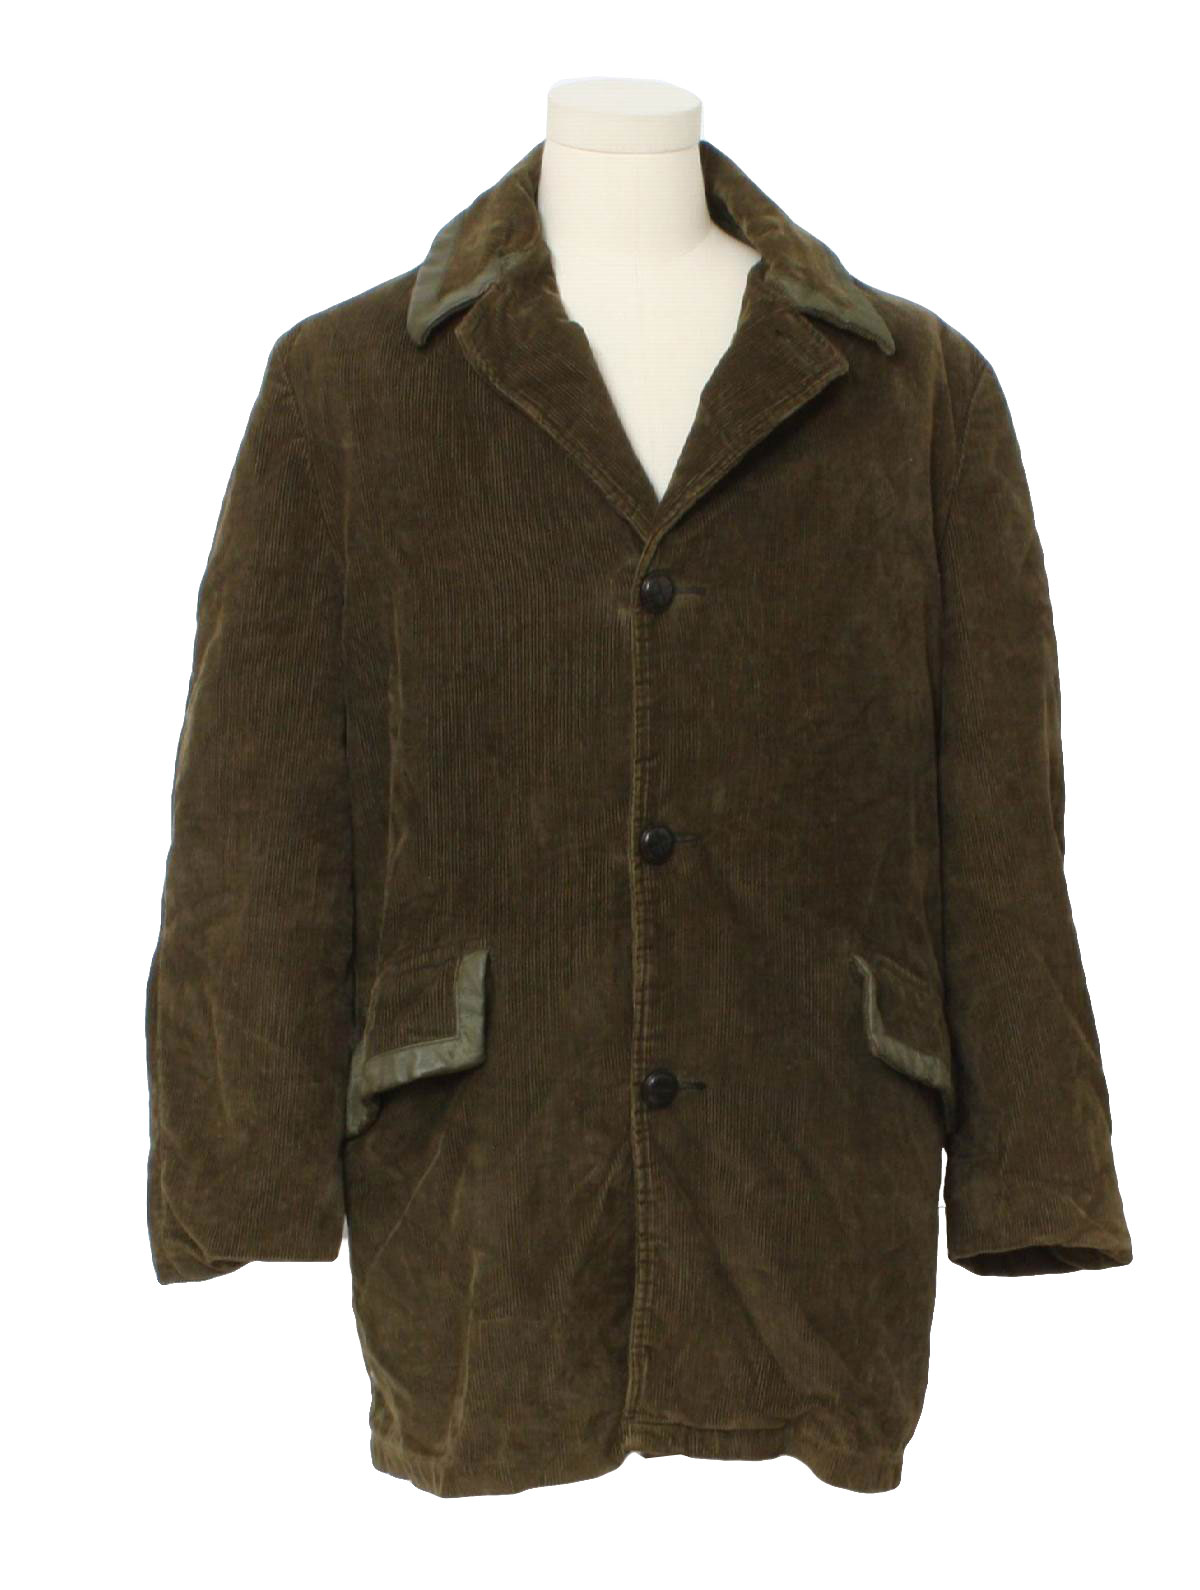 Retro 1960's Jacket: 60s -no label- Mens drk olive-brown cotton blend ...